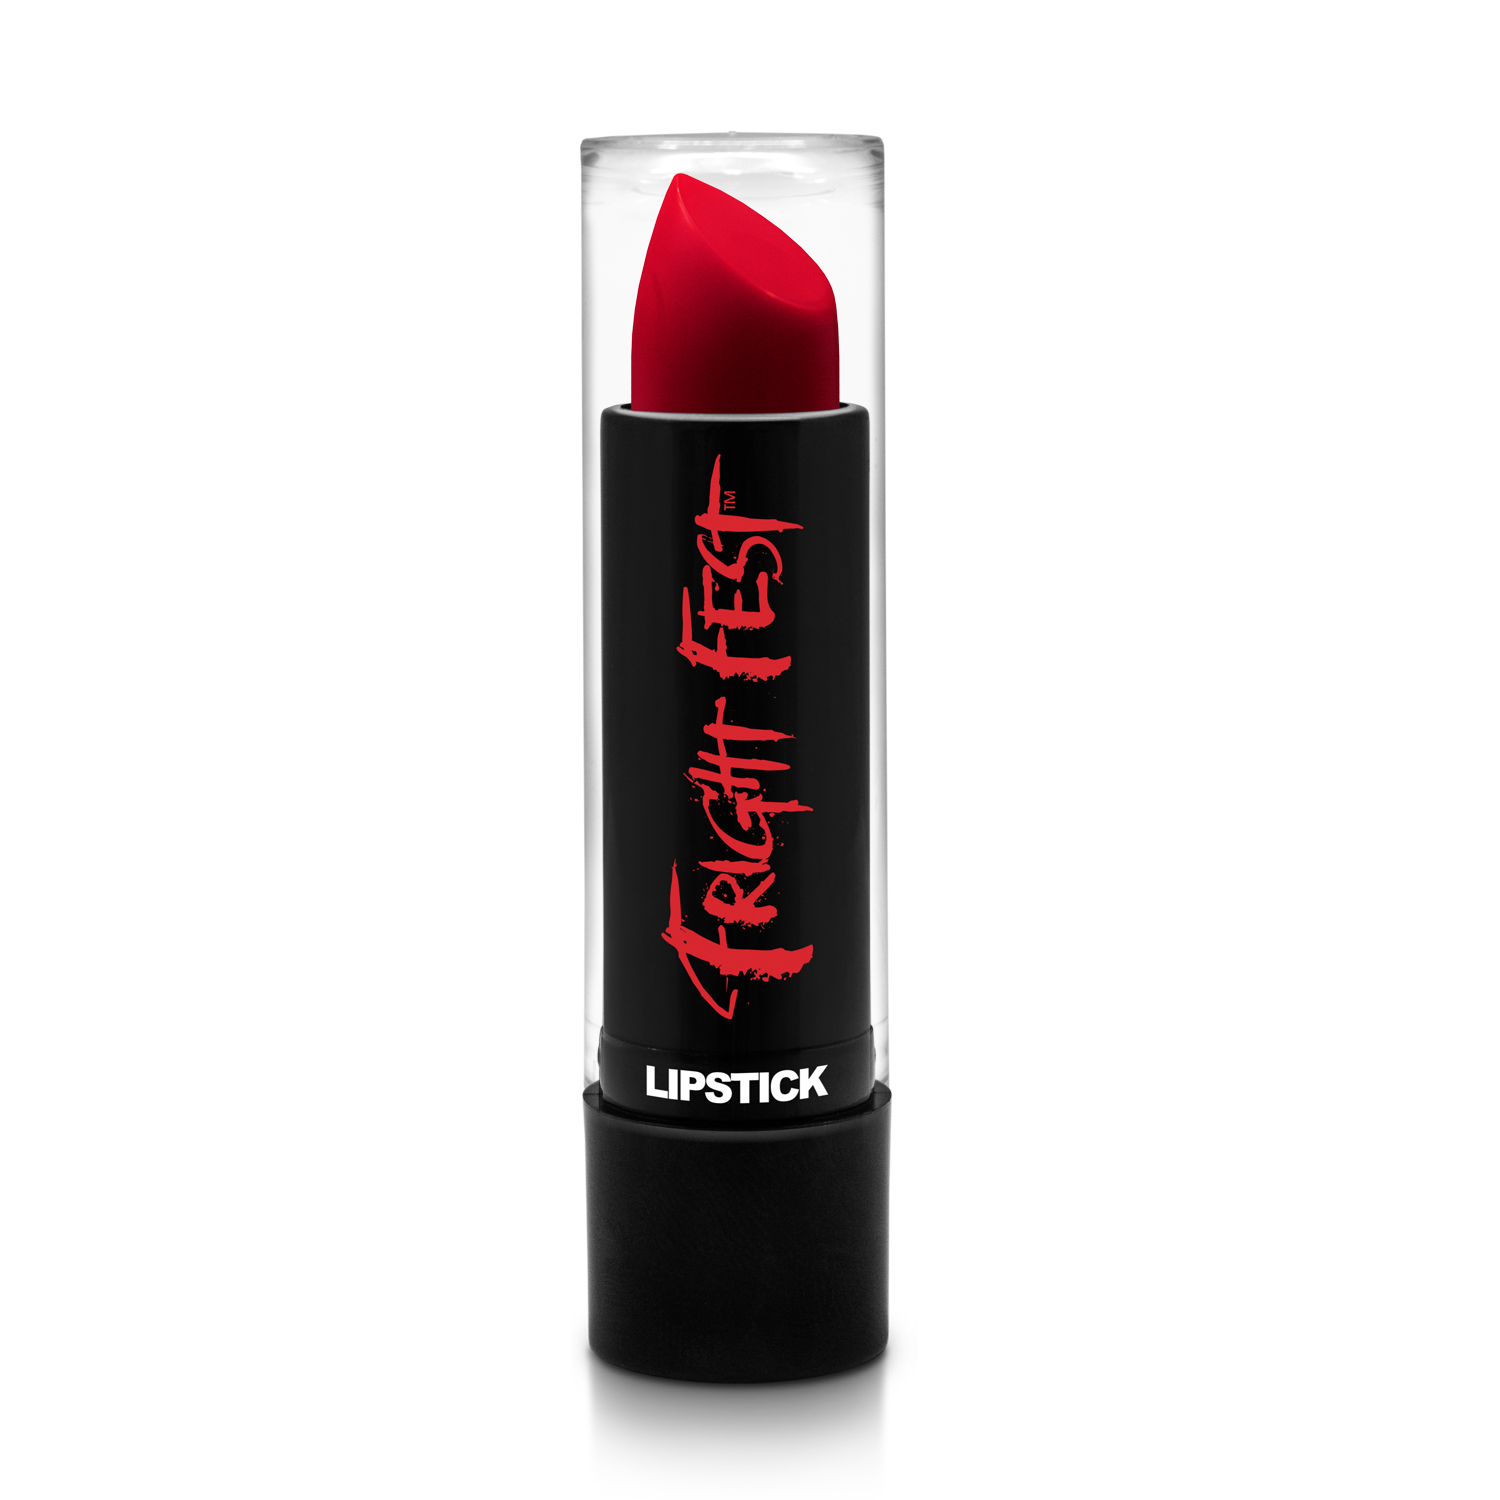 Lipstick, red